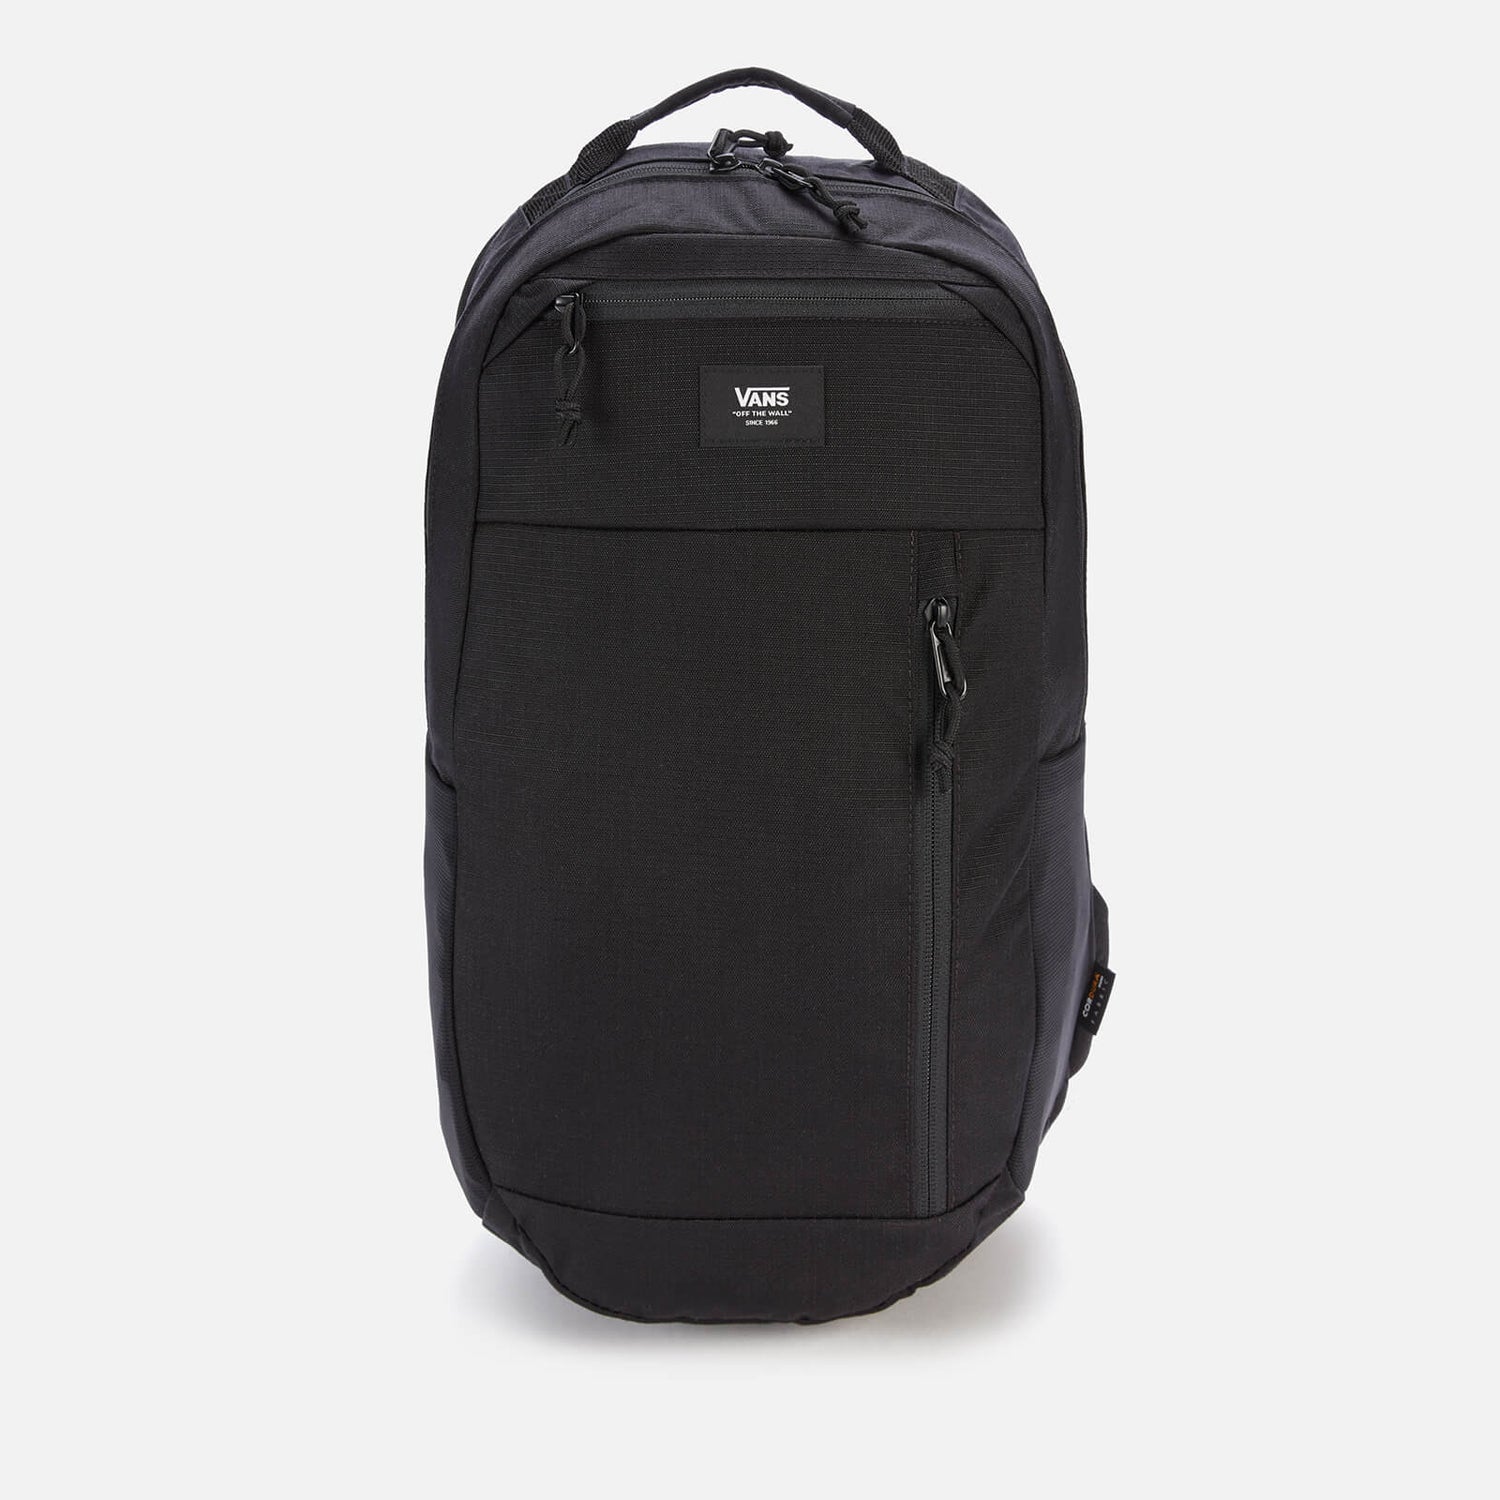 Vans Men's Disorder Plus Backpack - Black Ripstop